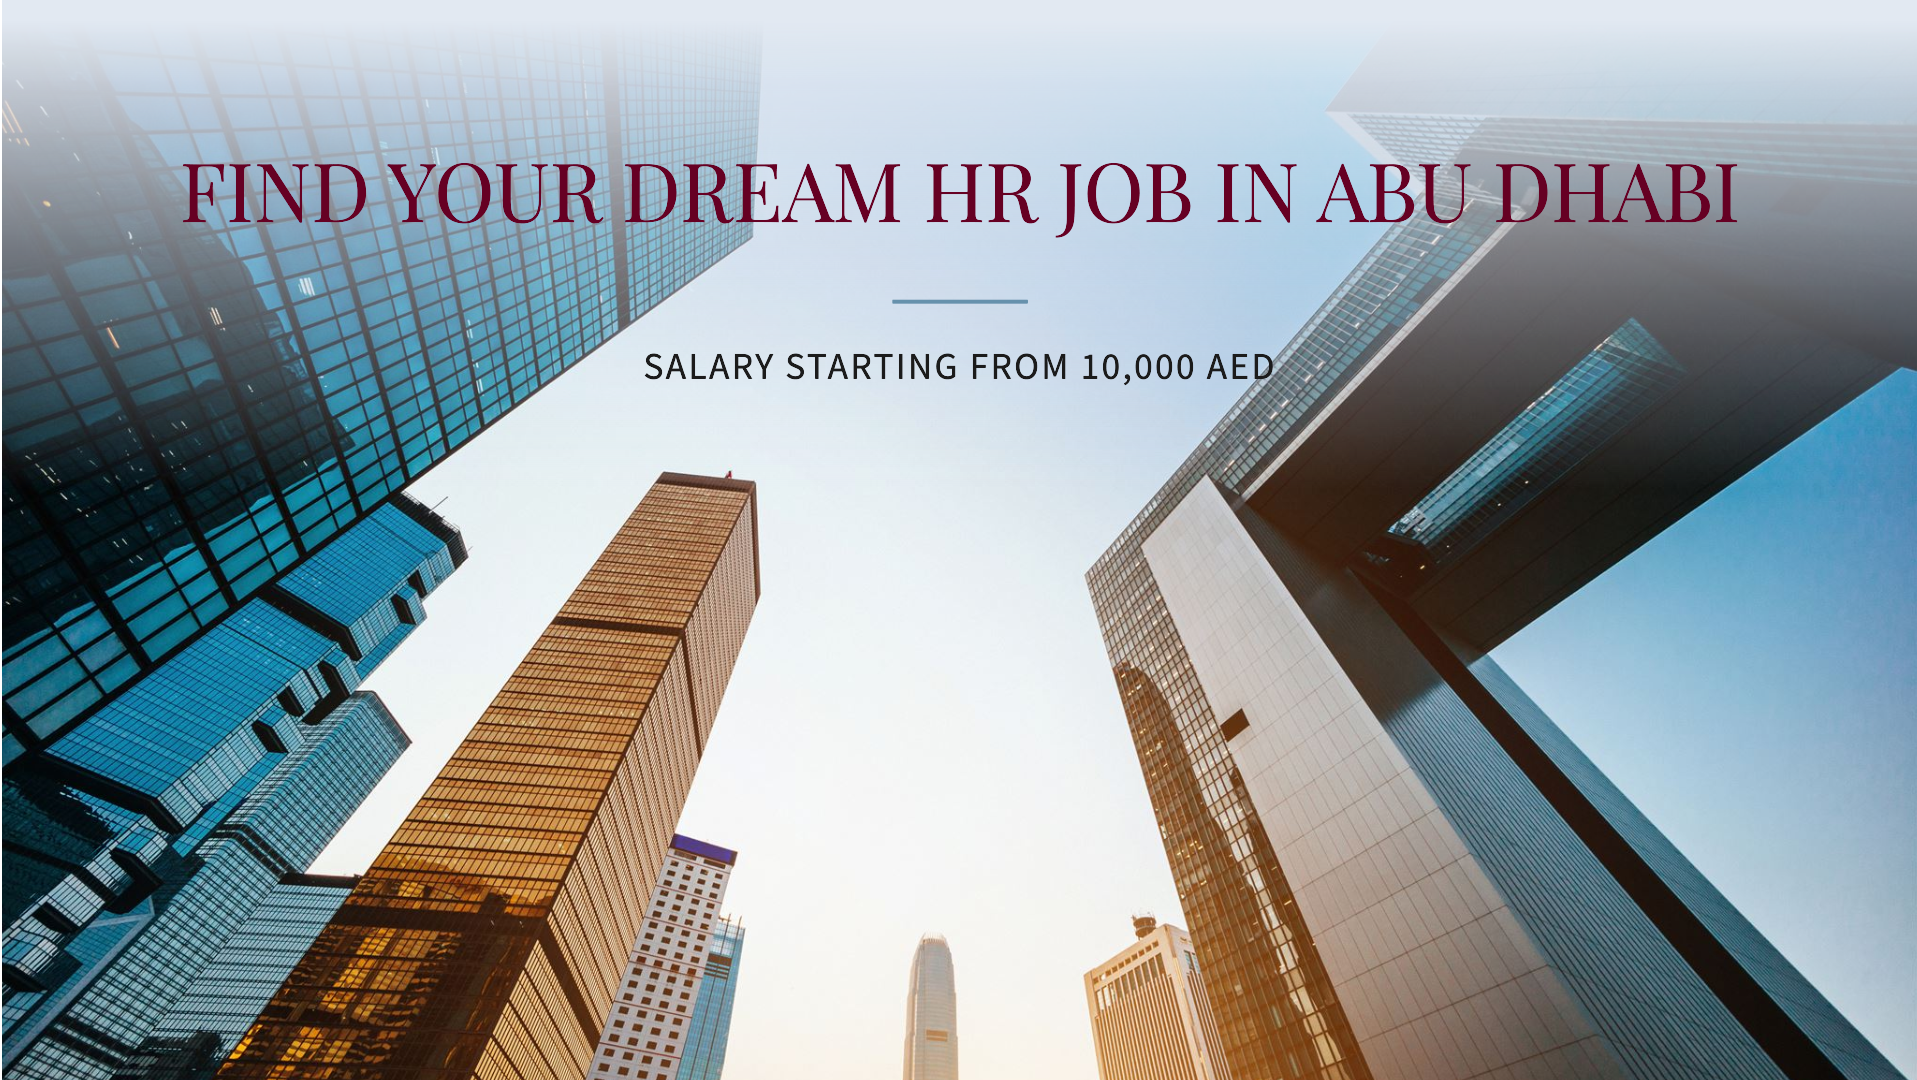 HR jobs in Abu Dhabi (10,000 AED)